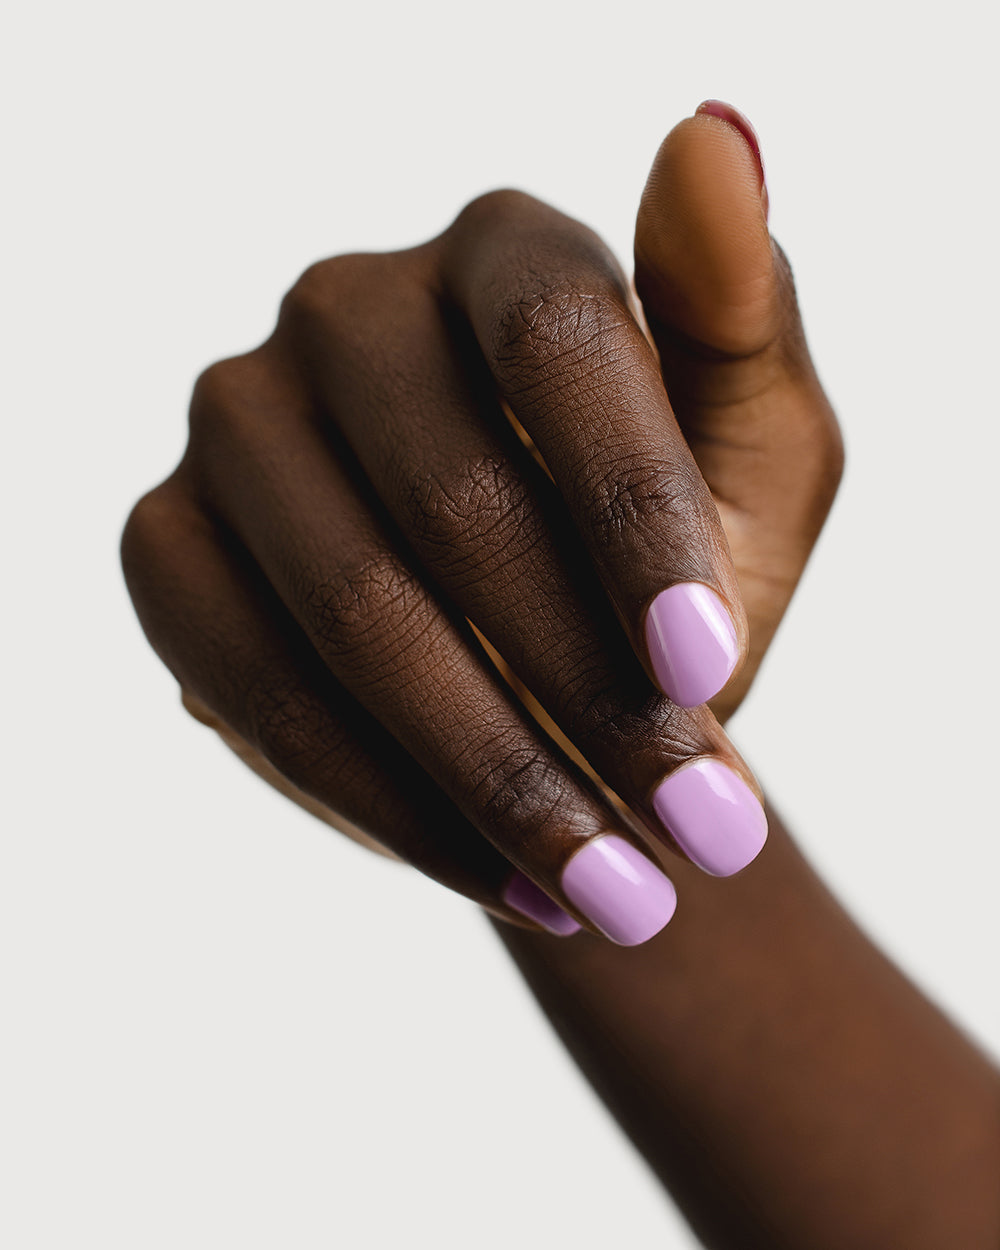 Mid-tone lilac nail polish hand swatch on dark skin tone